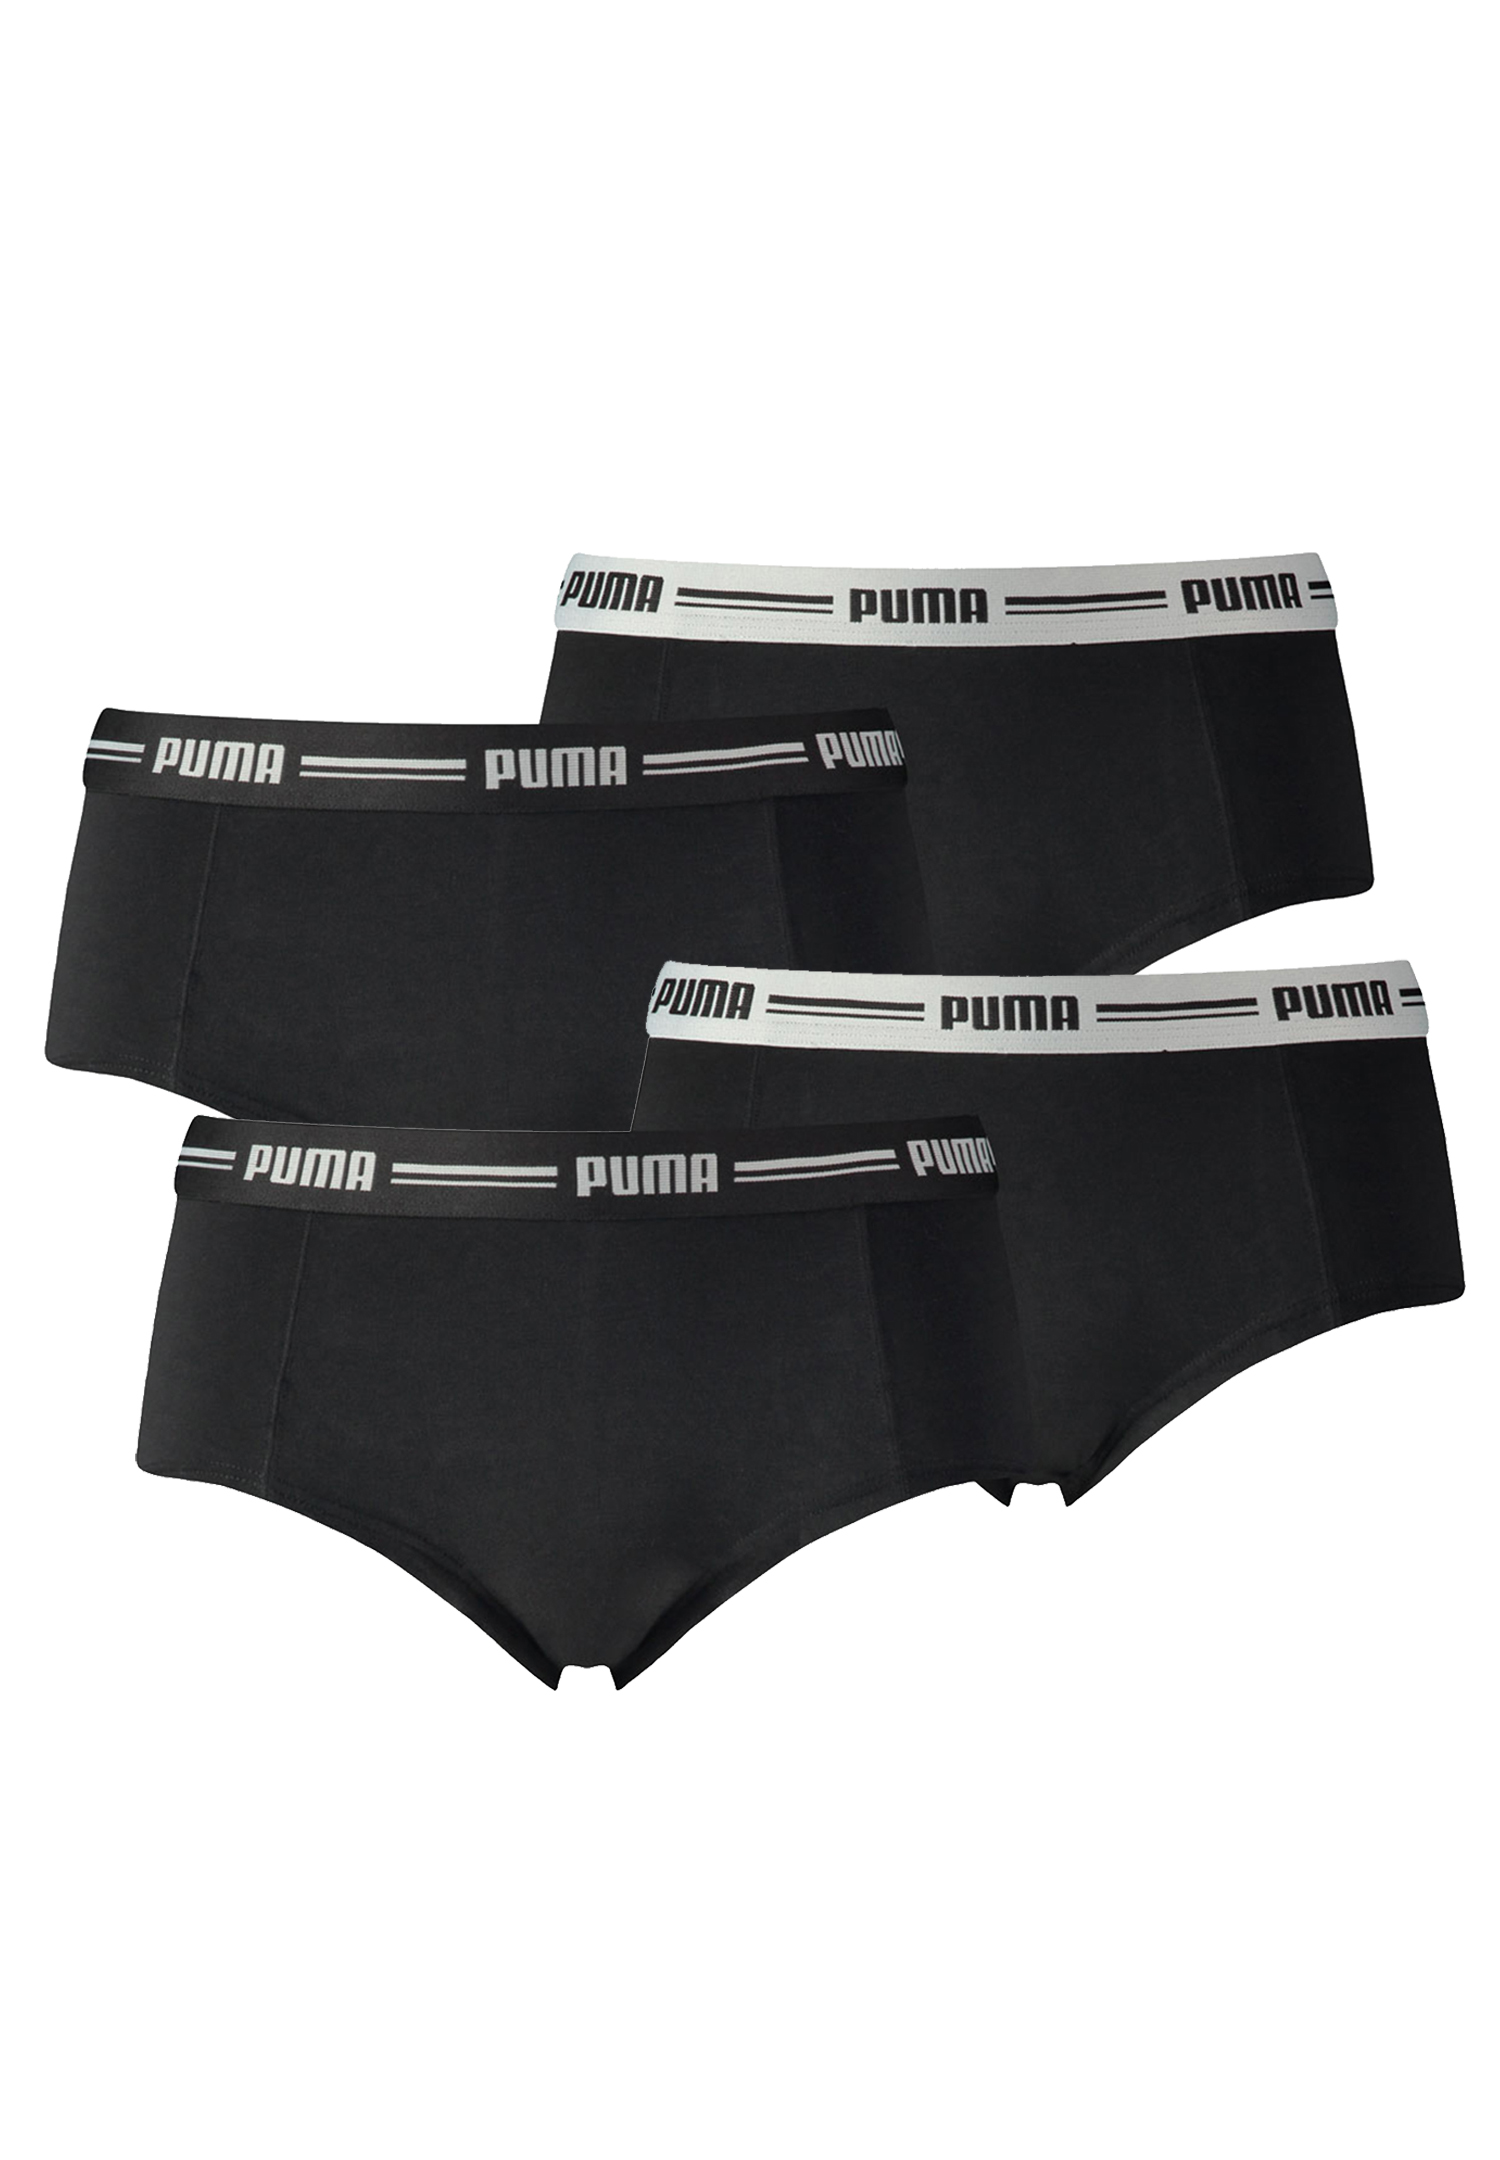 4er Pack Puma Iconic Mini Short Damen Panty Slip Shorty Unterwäsche Unterhose